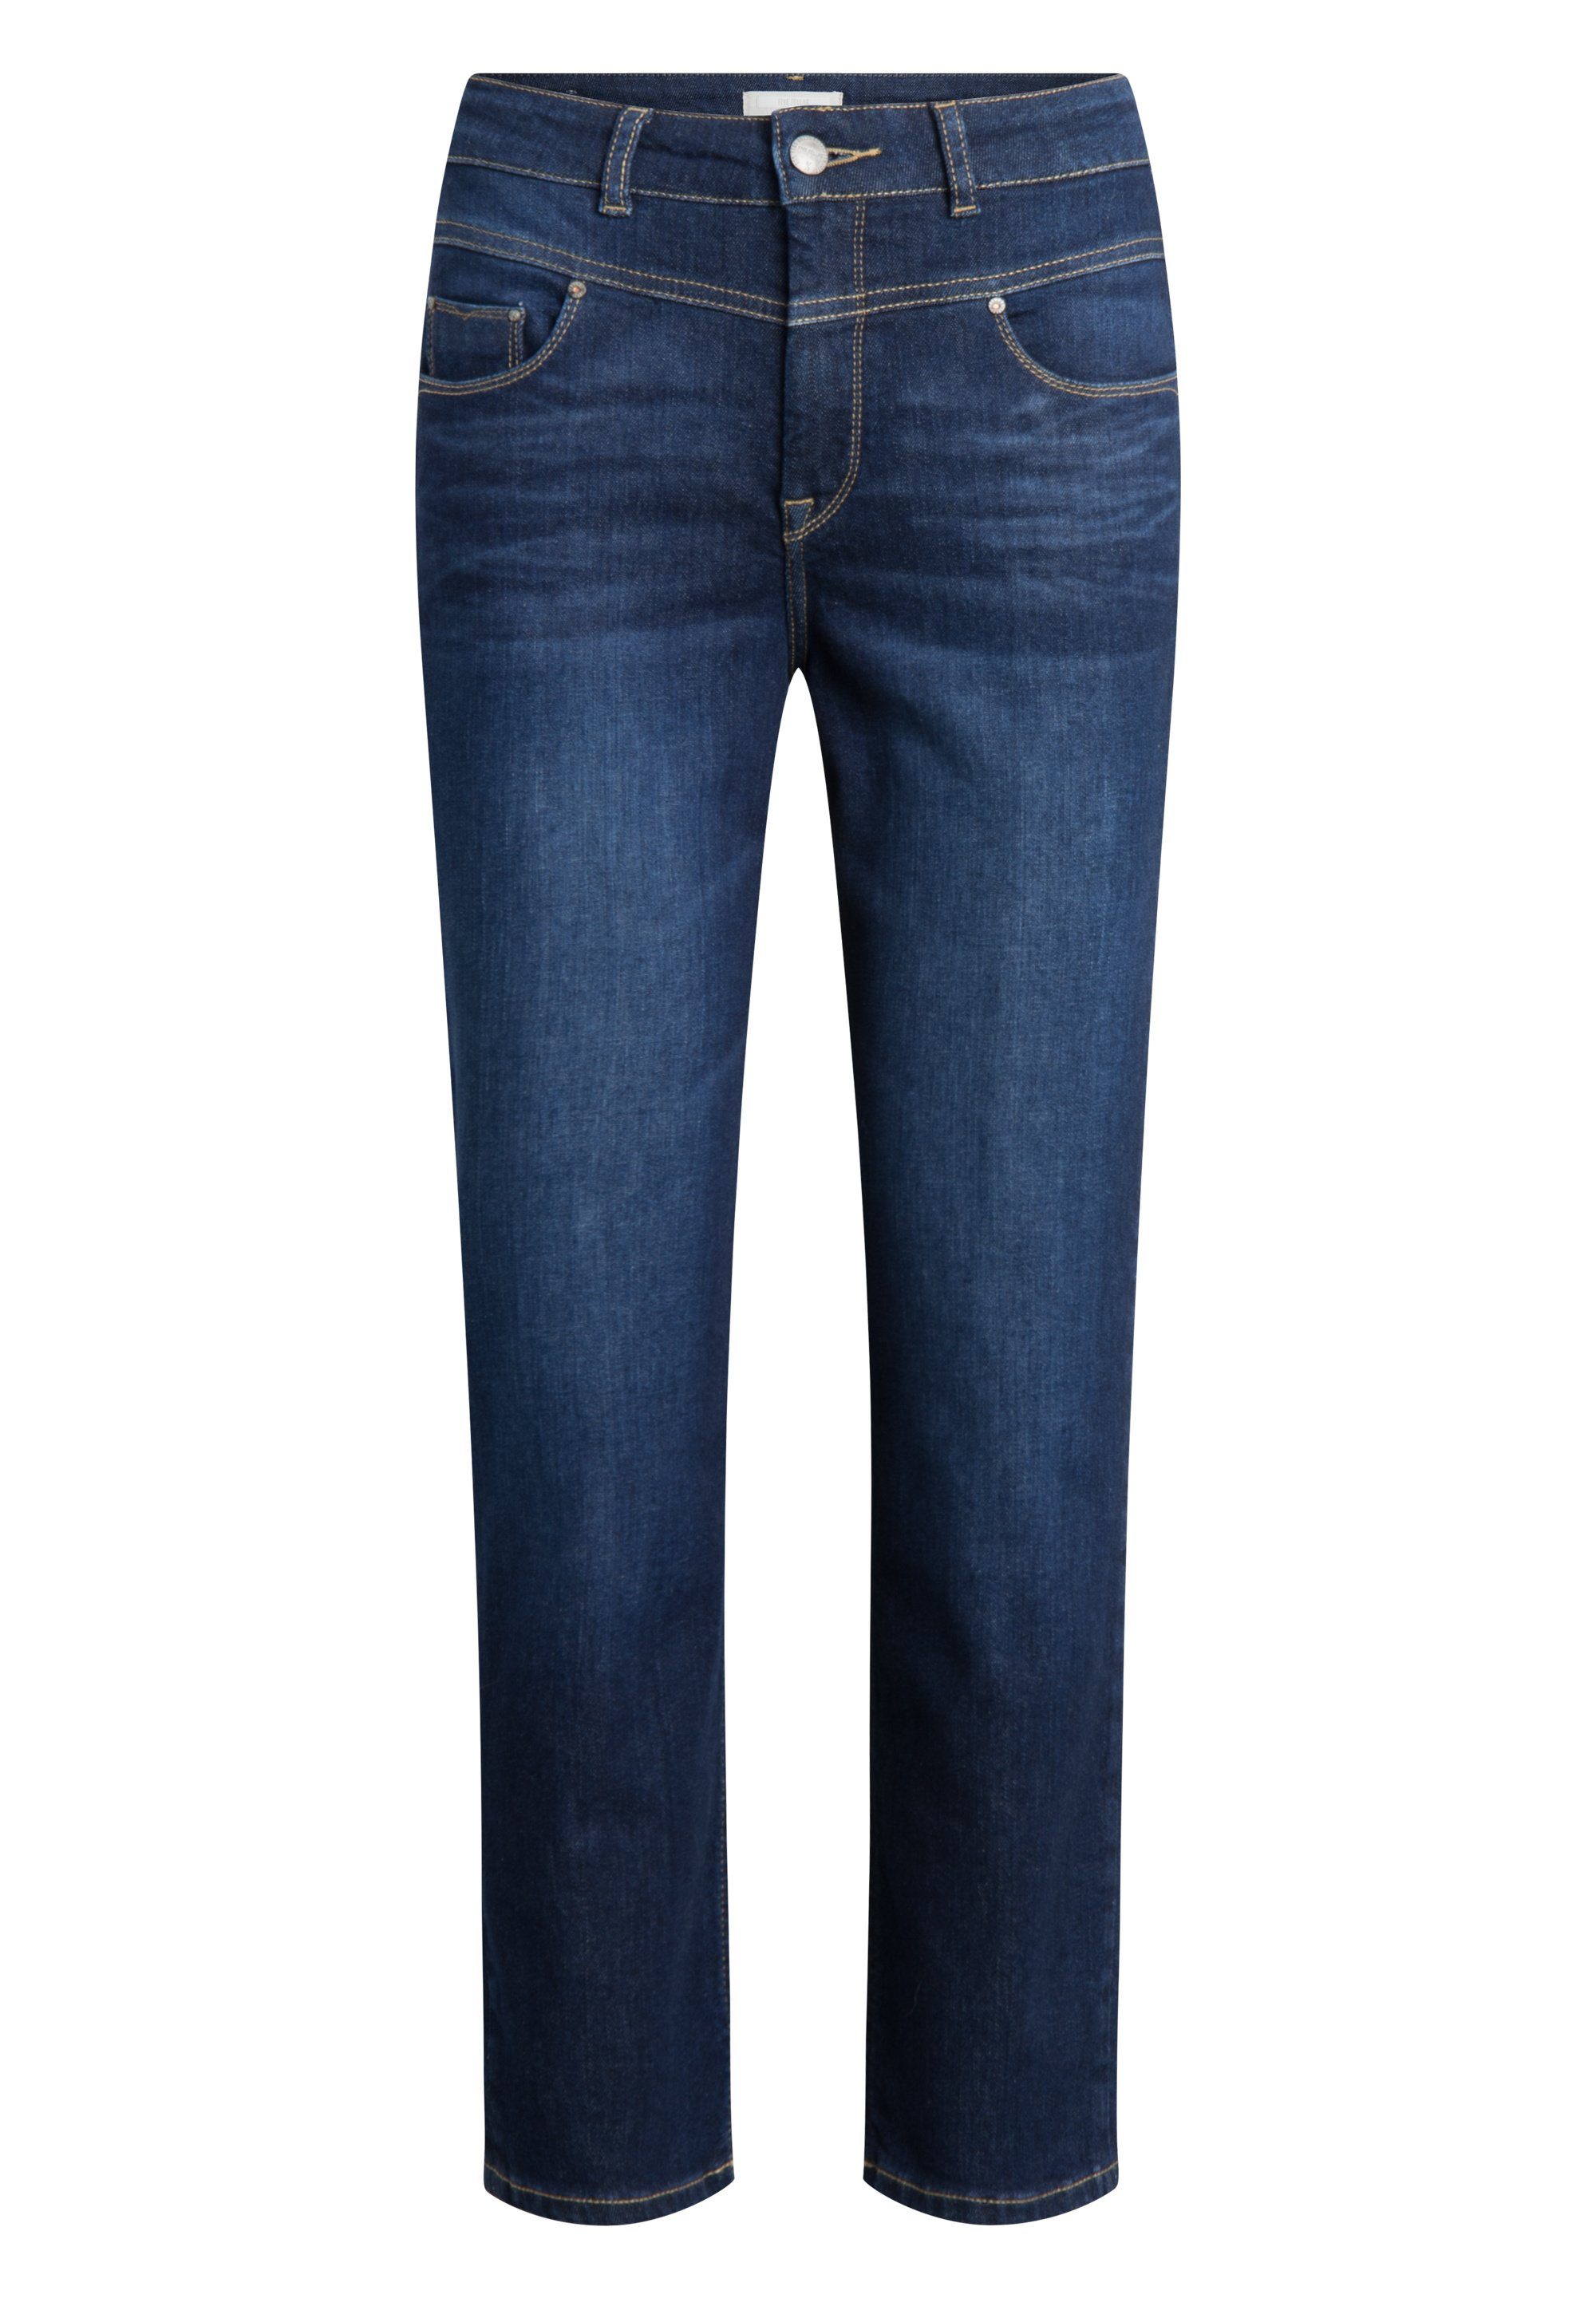 FIVE FELLAS 7/8-Jeans blau nachhaltig, 513-12M Italien, EMILIE Stretch